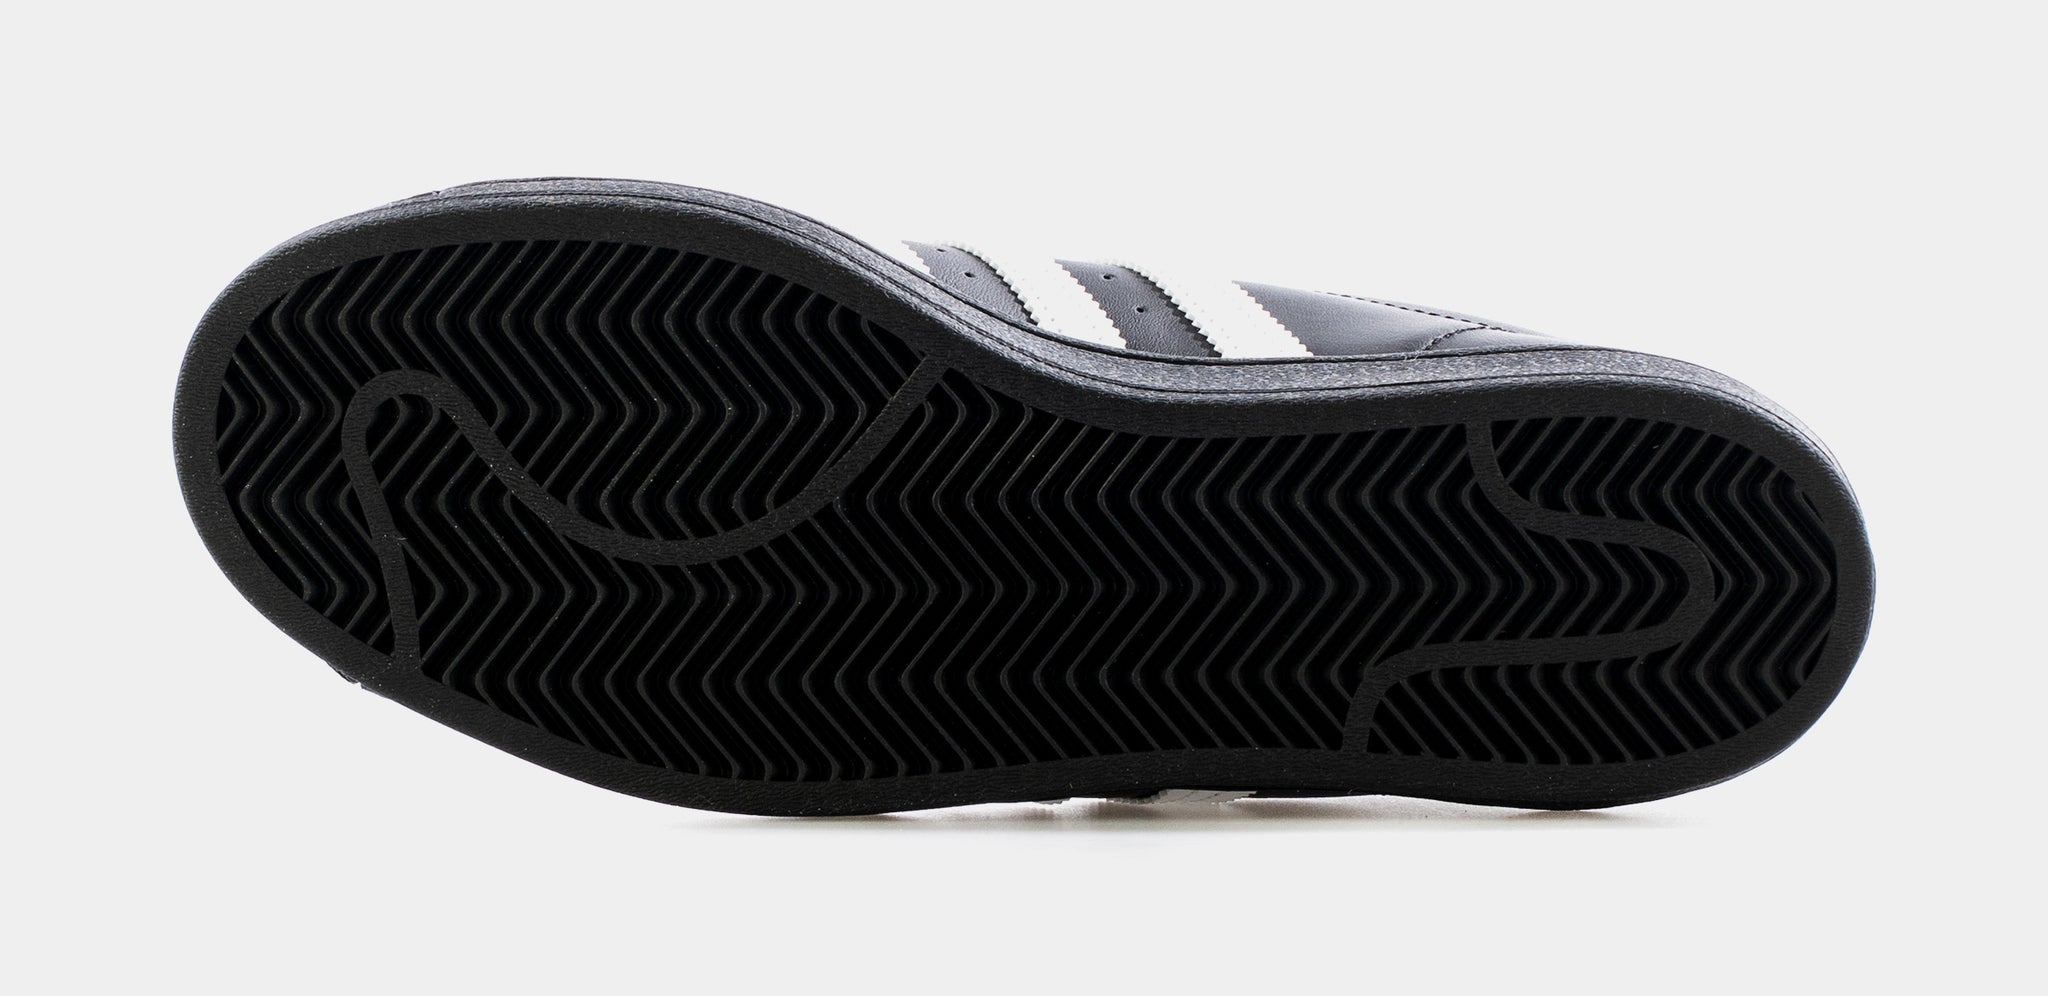 NEW Adidas Superstar Black, Size US 4~6 - EG4959